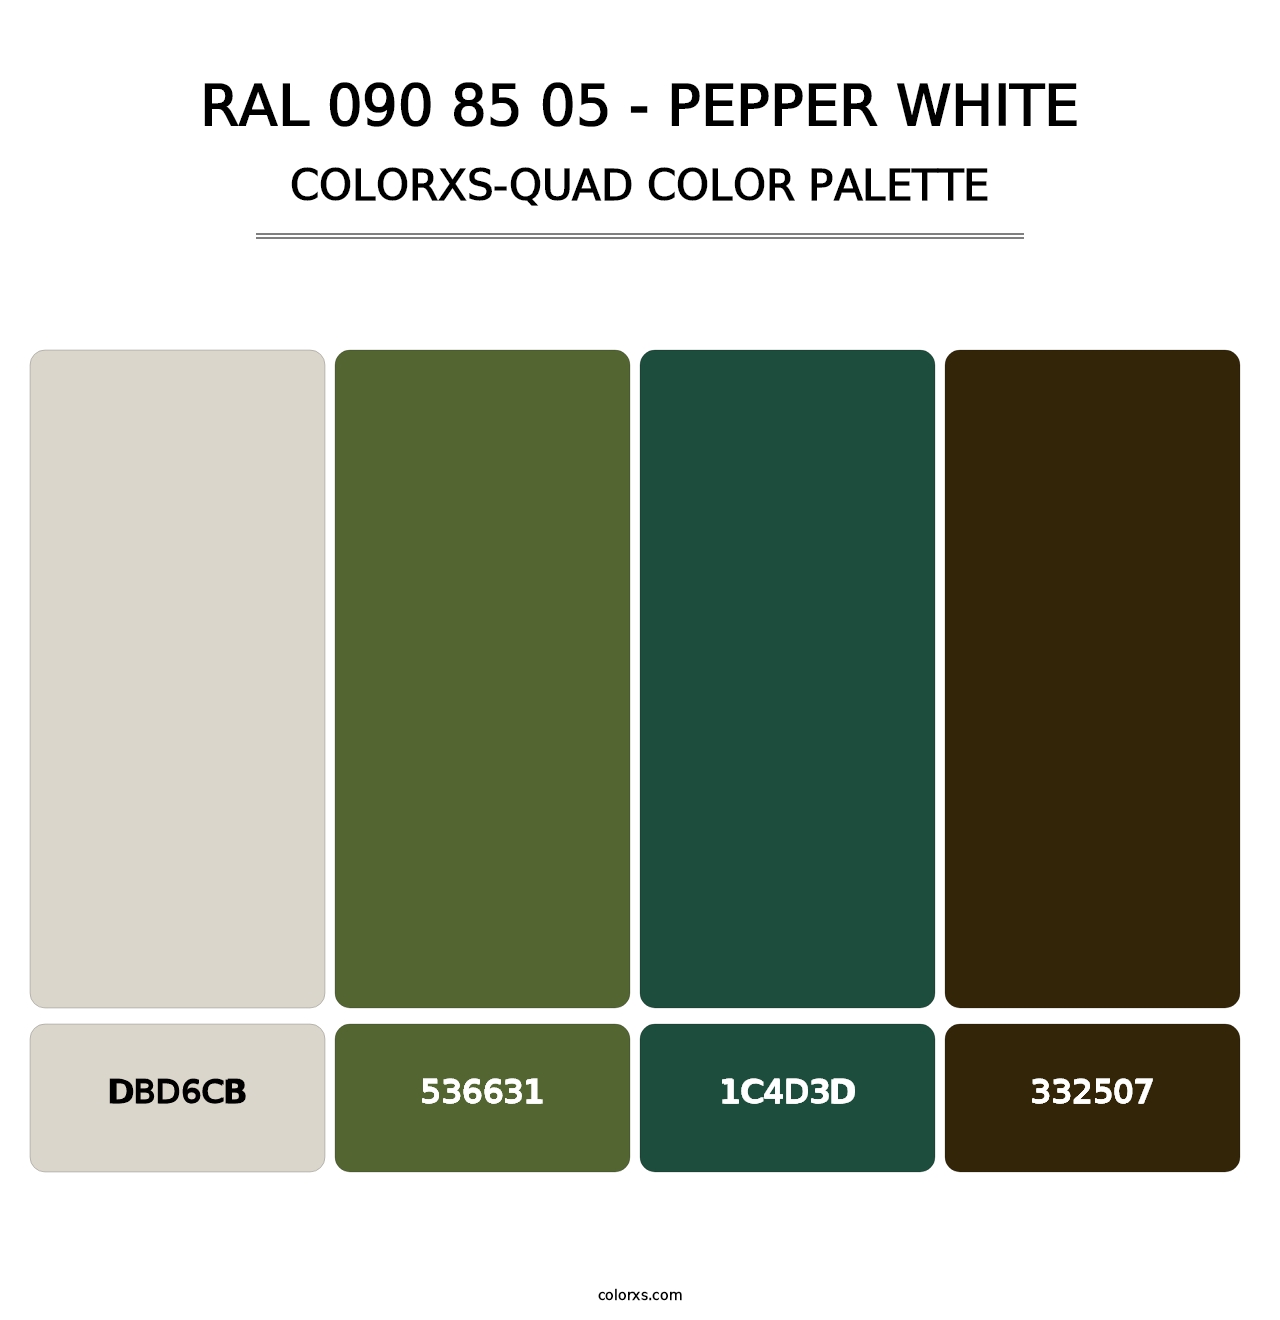 RAL 090 85 05 - Pepper White - Colorxs Quad Palette